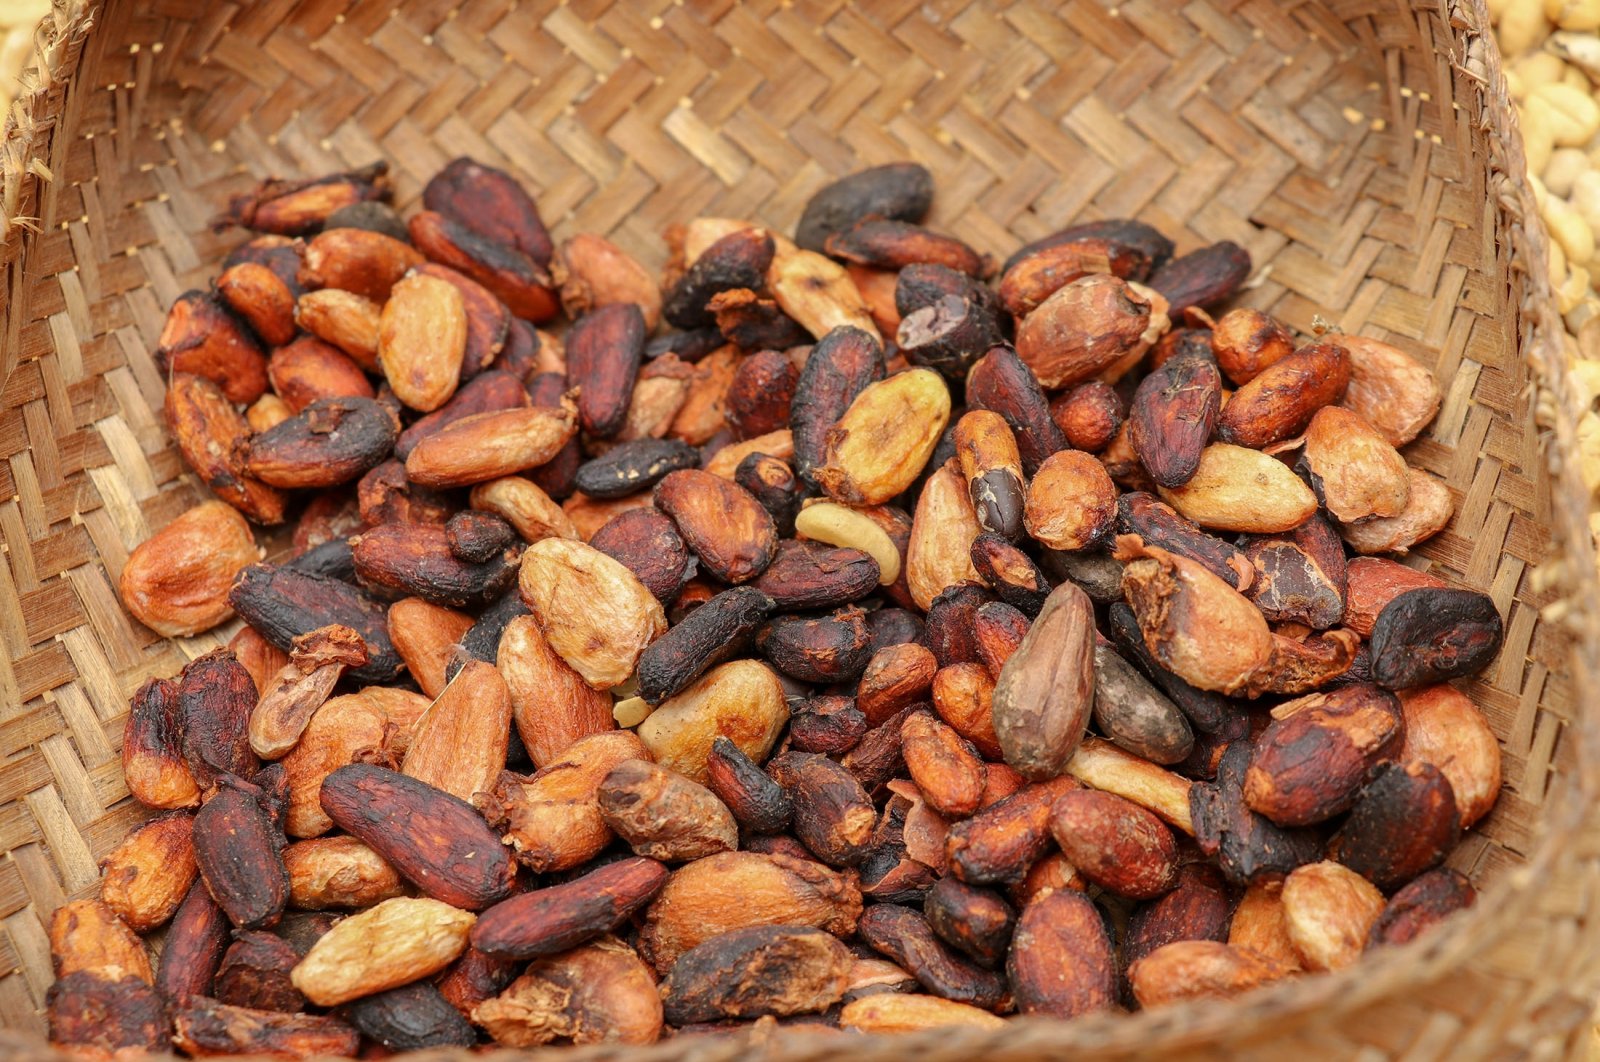 Cokelat penyelamat dunia: Biji kakao dapat membantu mengatasi perubahan iklim